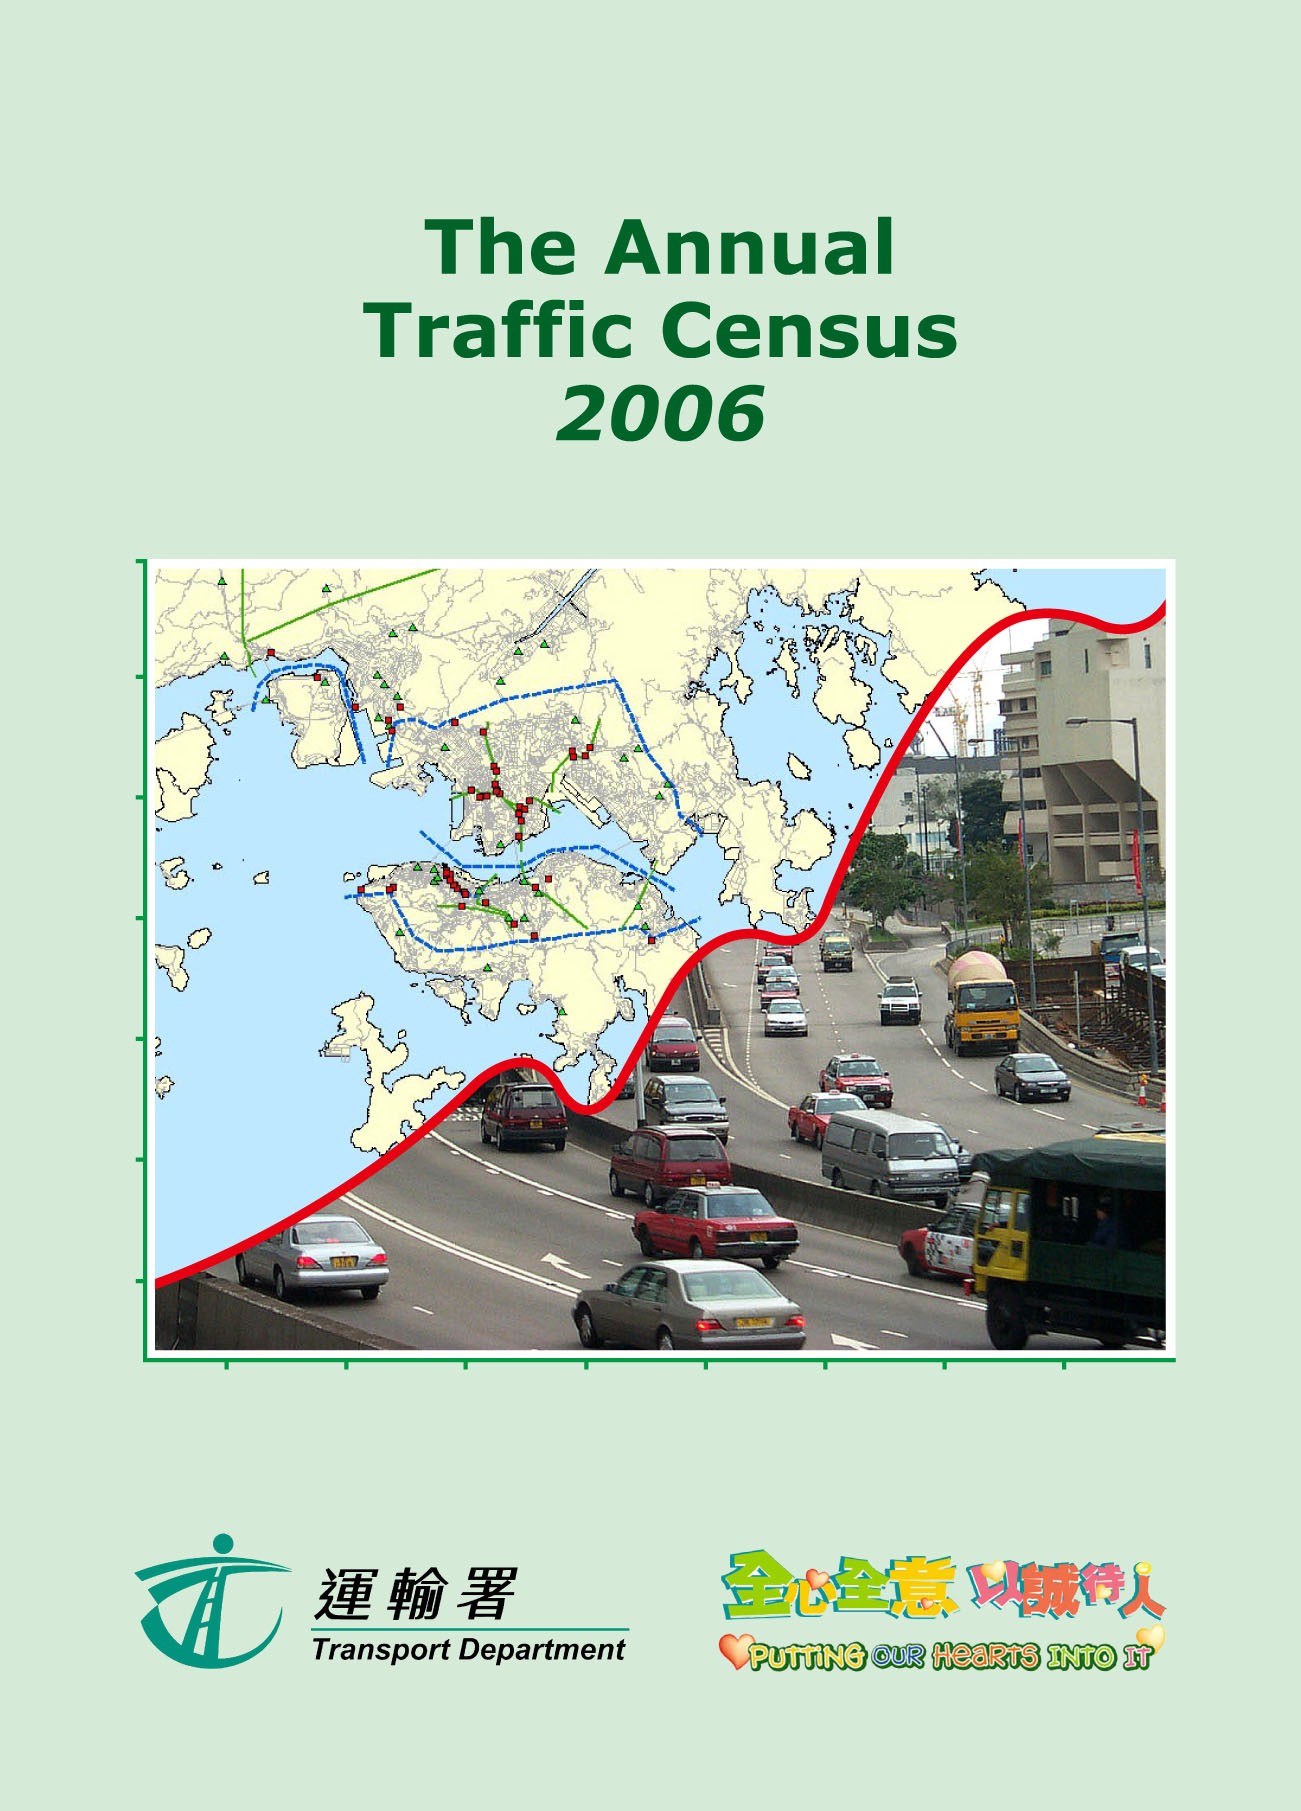 The Annual Traffic Census 2006